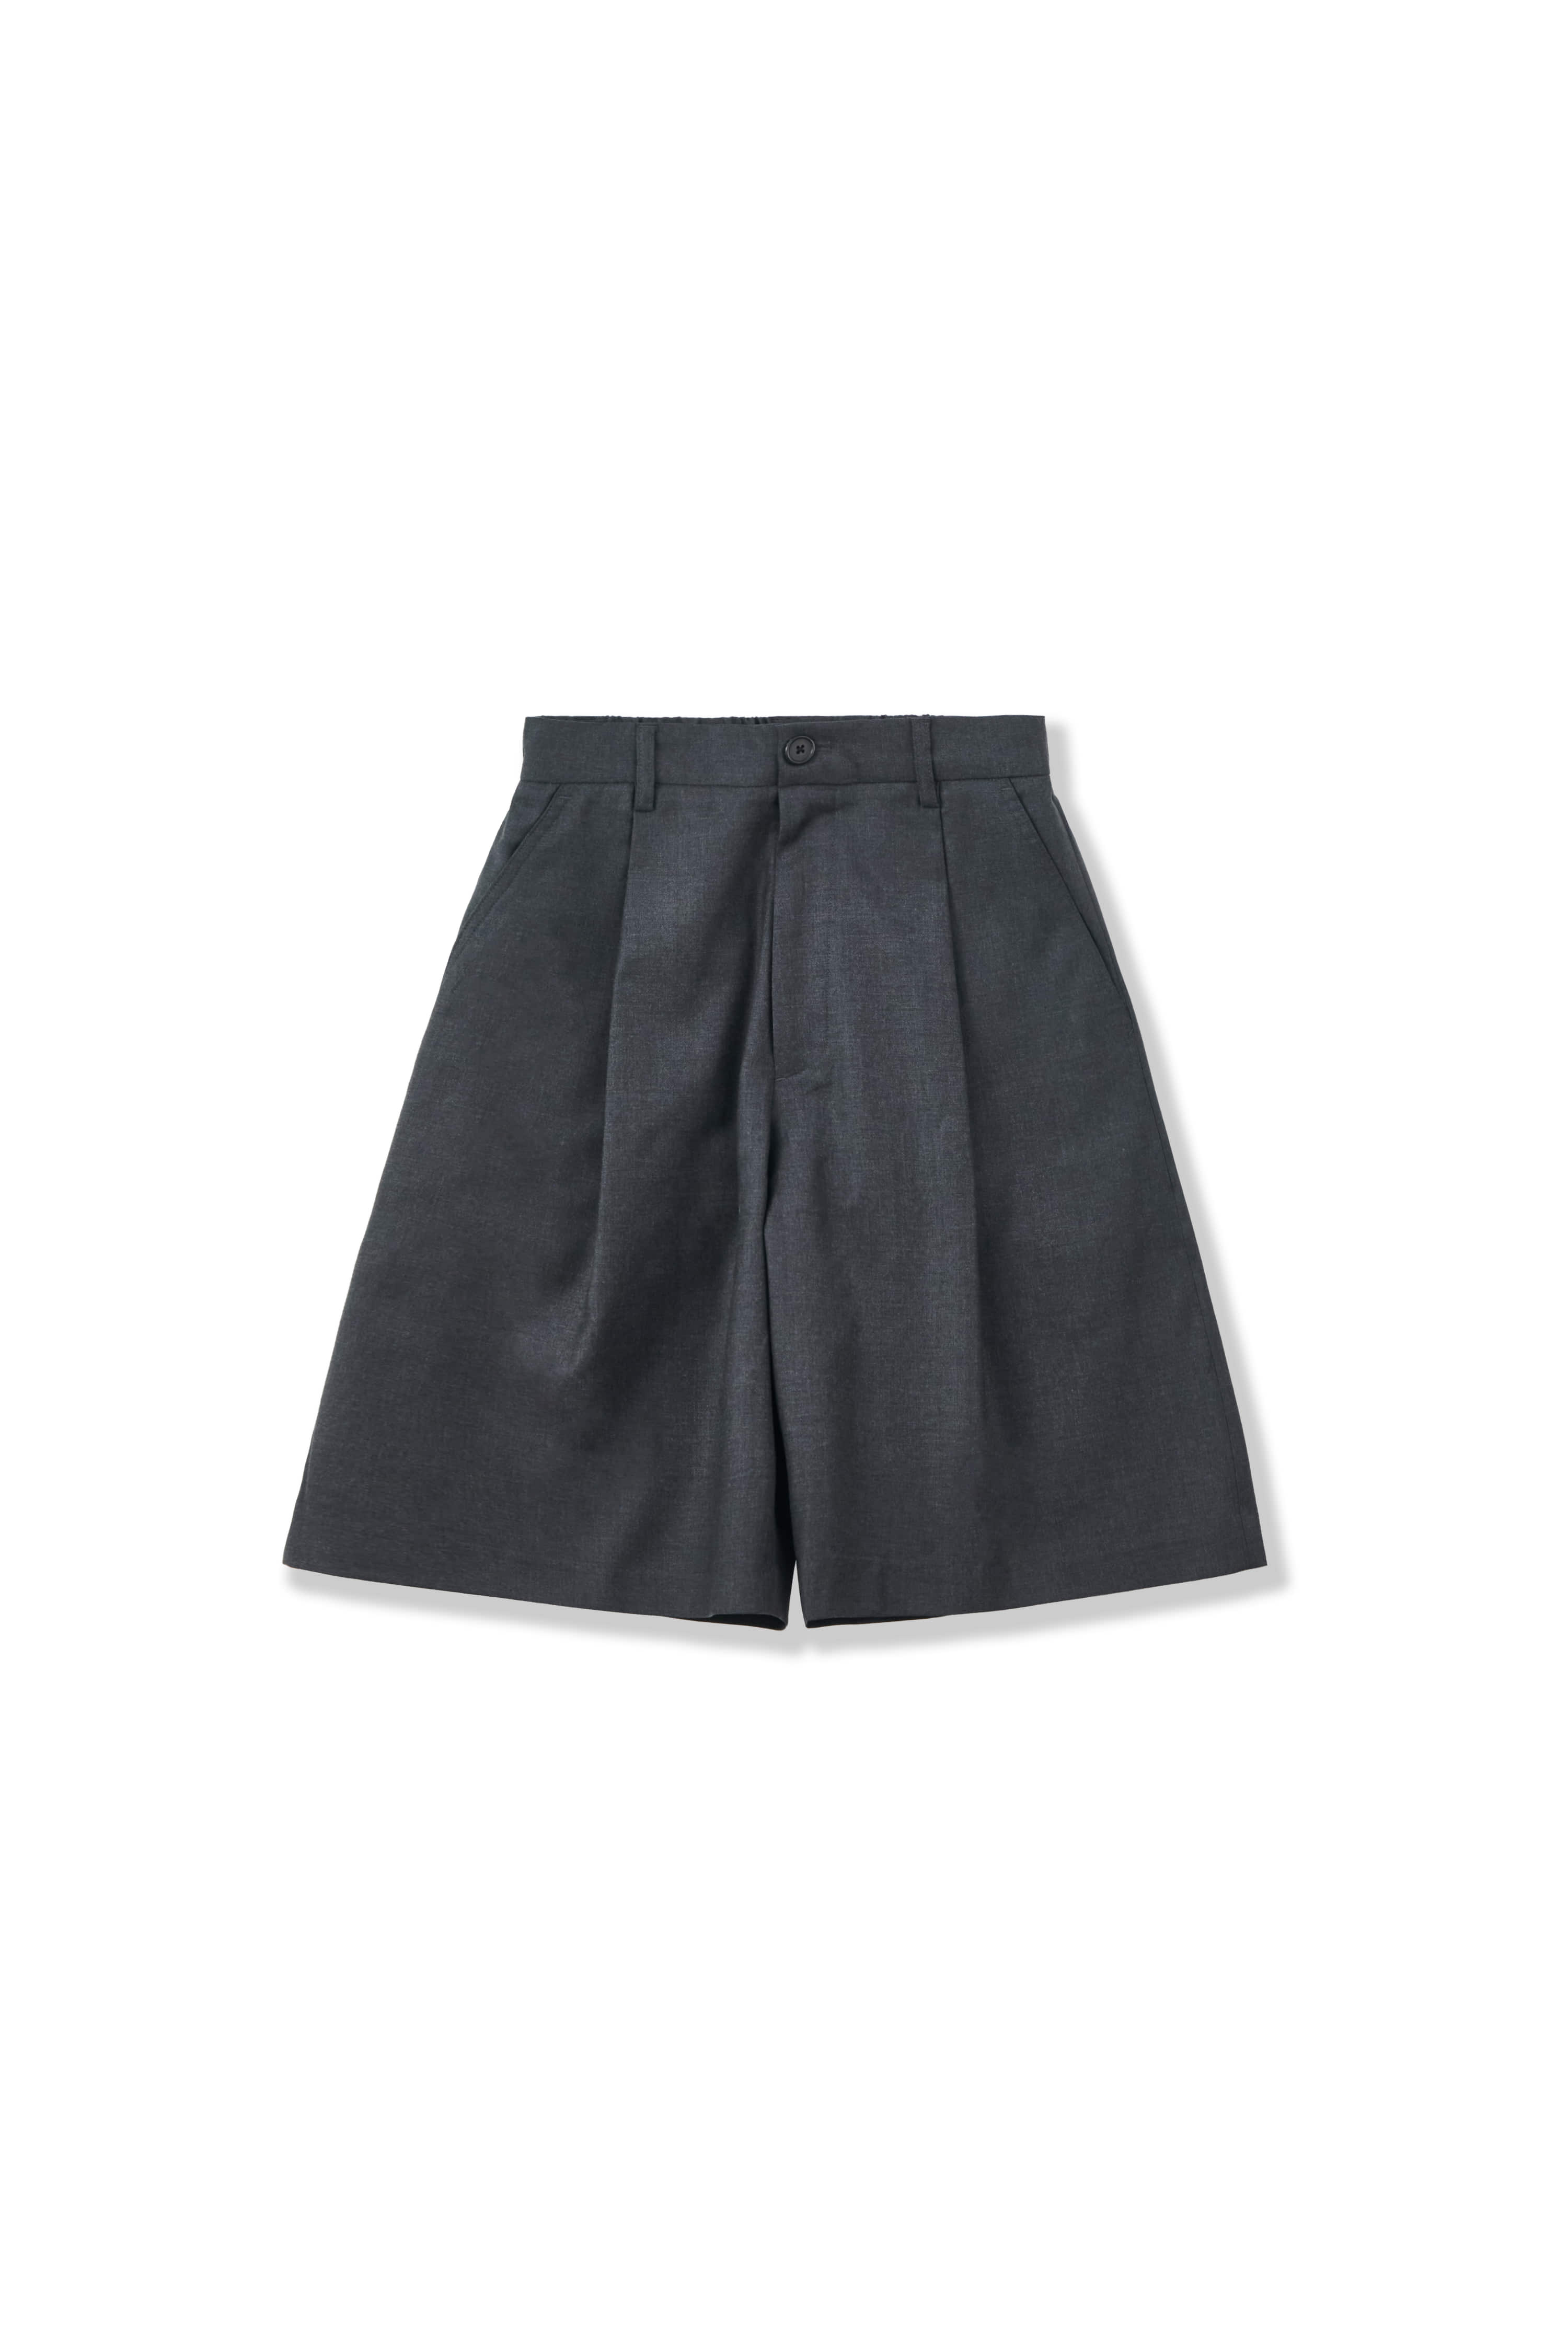 [TAKEASTREET exclusive] bermuda shorts_charcoal